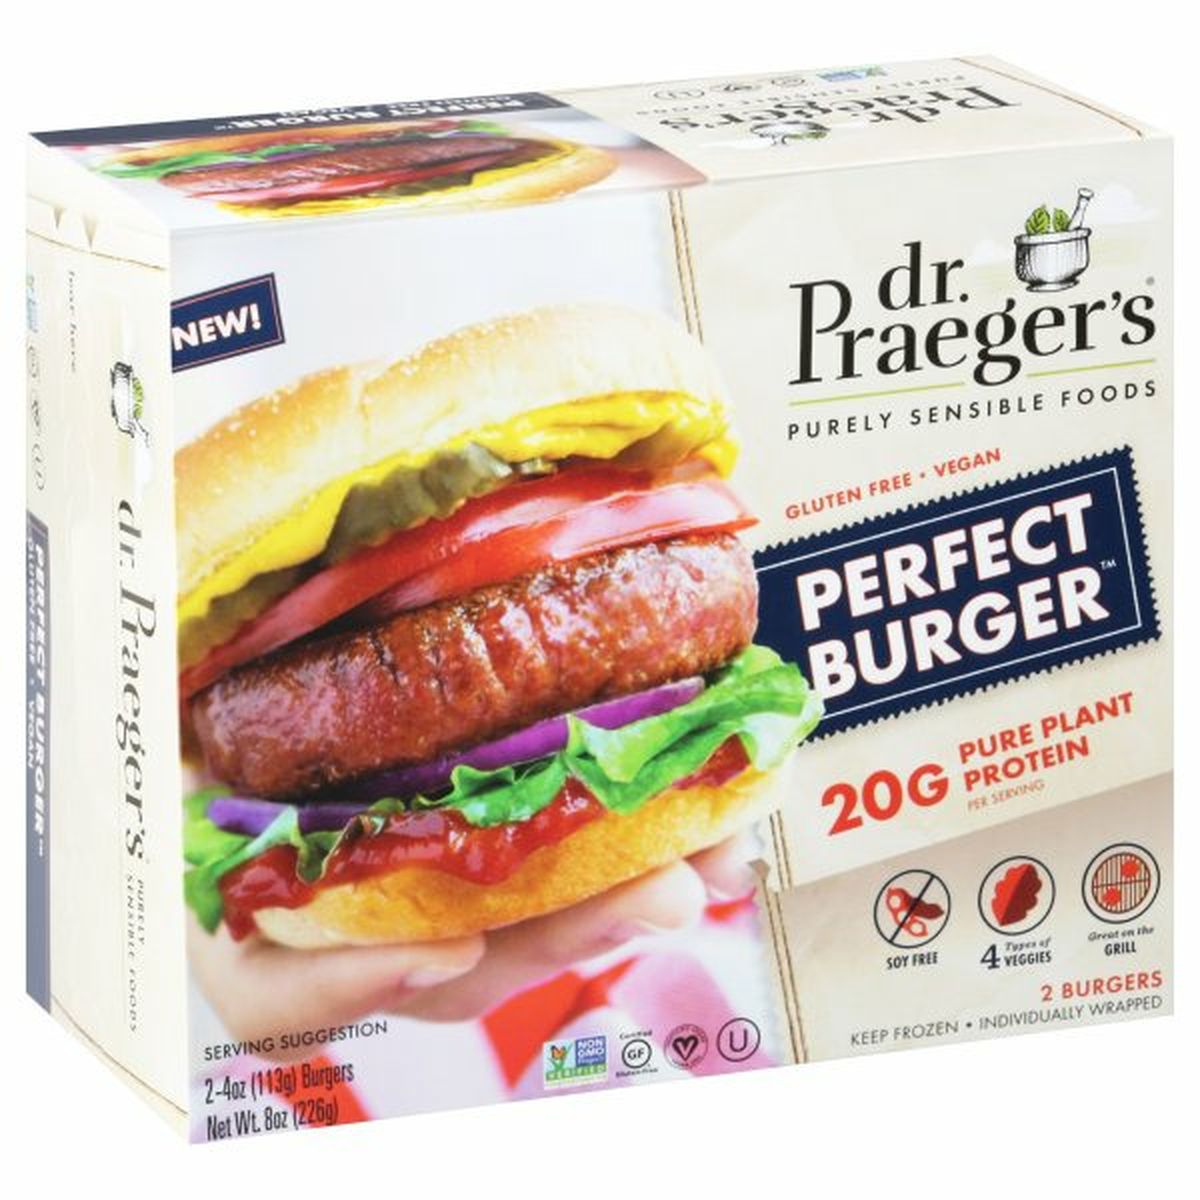 Calories in Dr. Praeger's Burger, Perfect